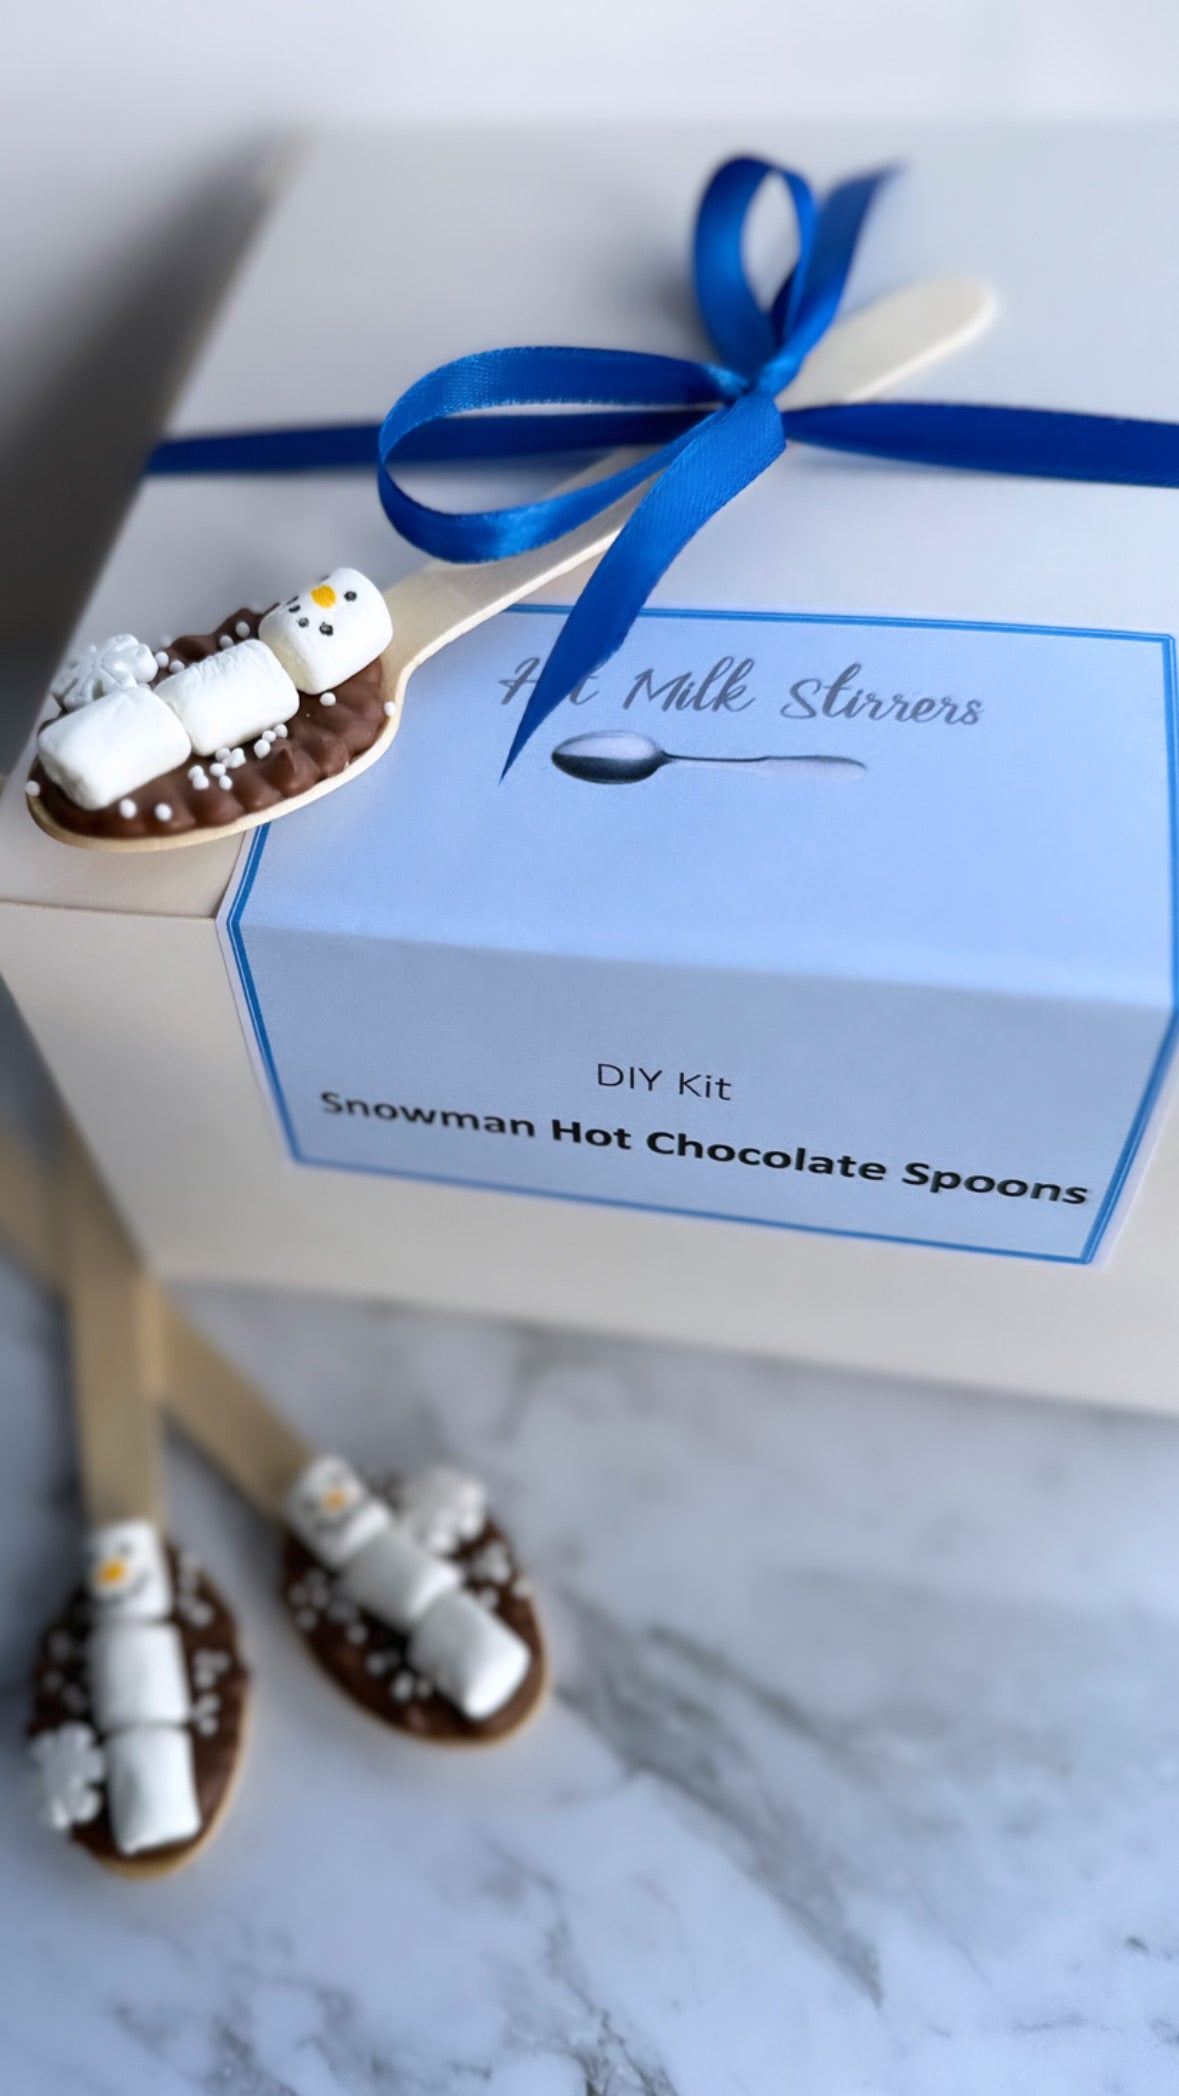 DIY Snowman Hot Chocolate Spoon Kits